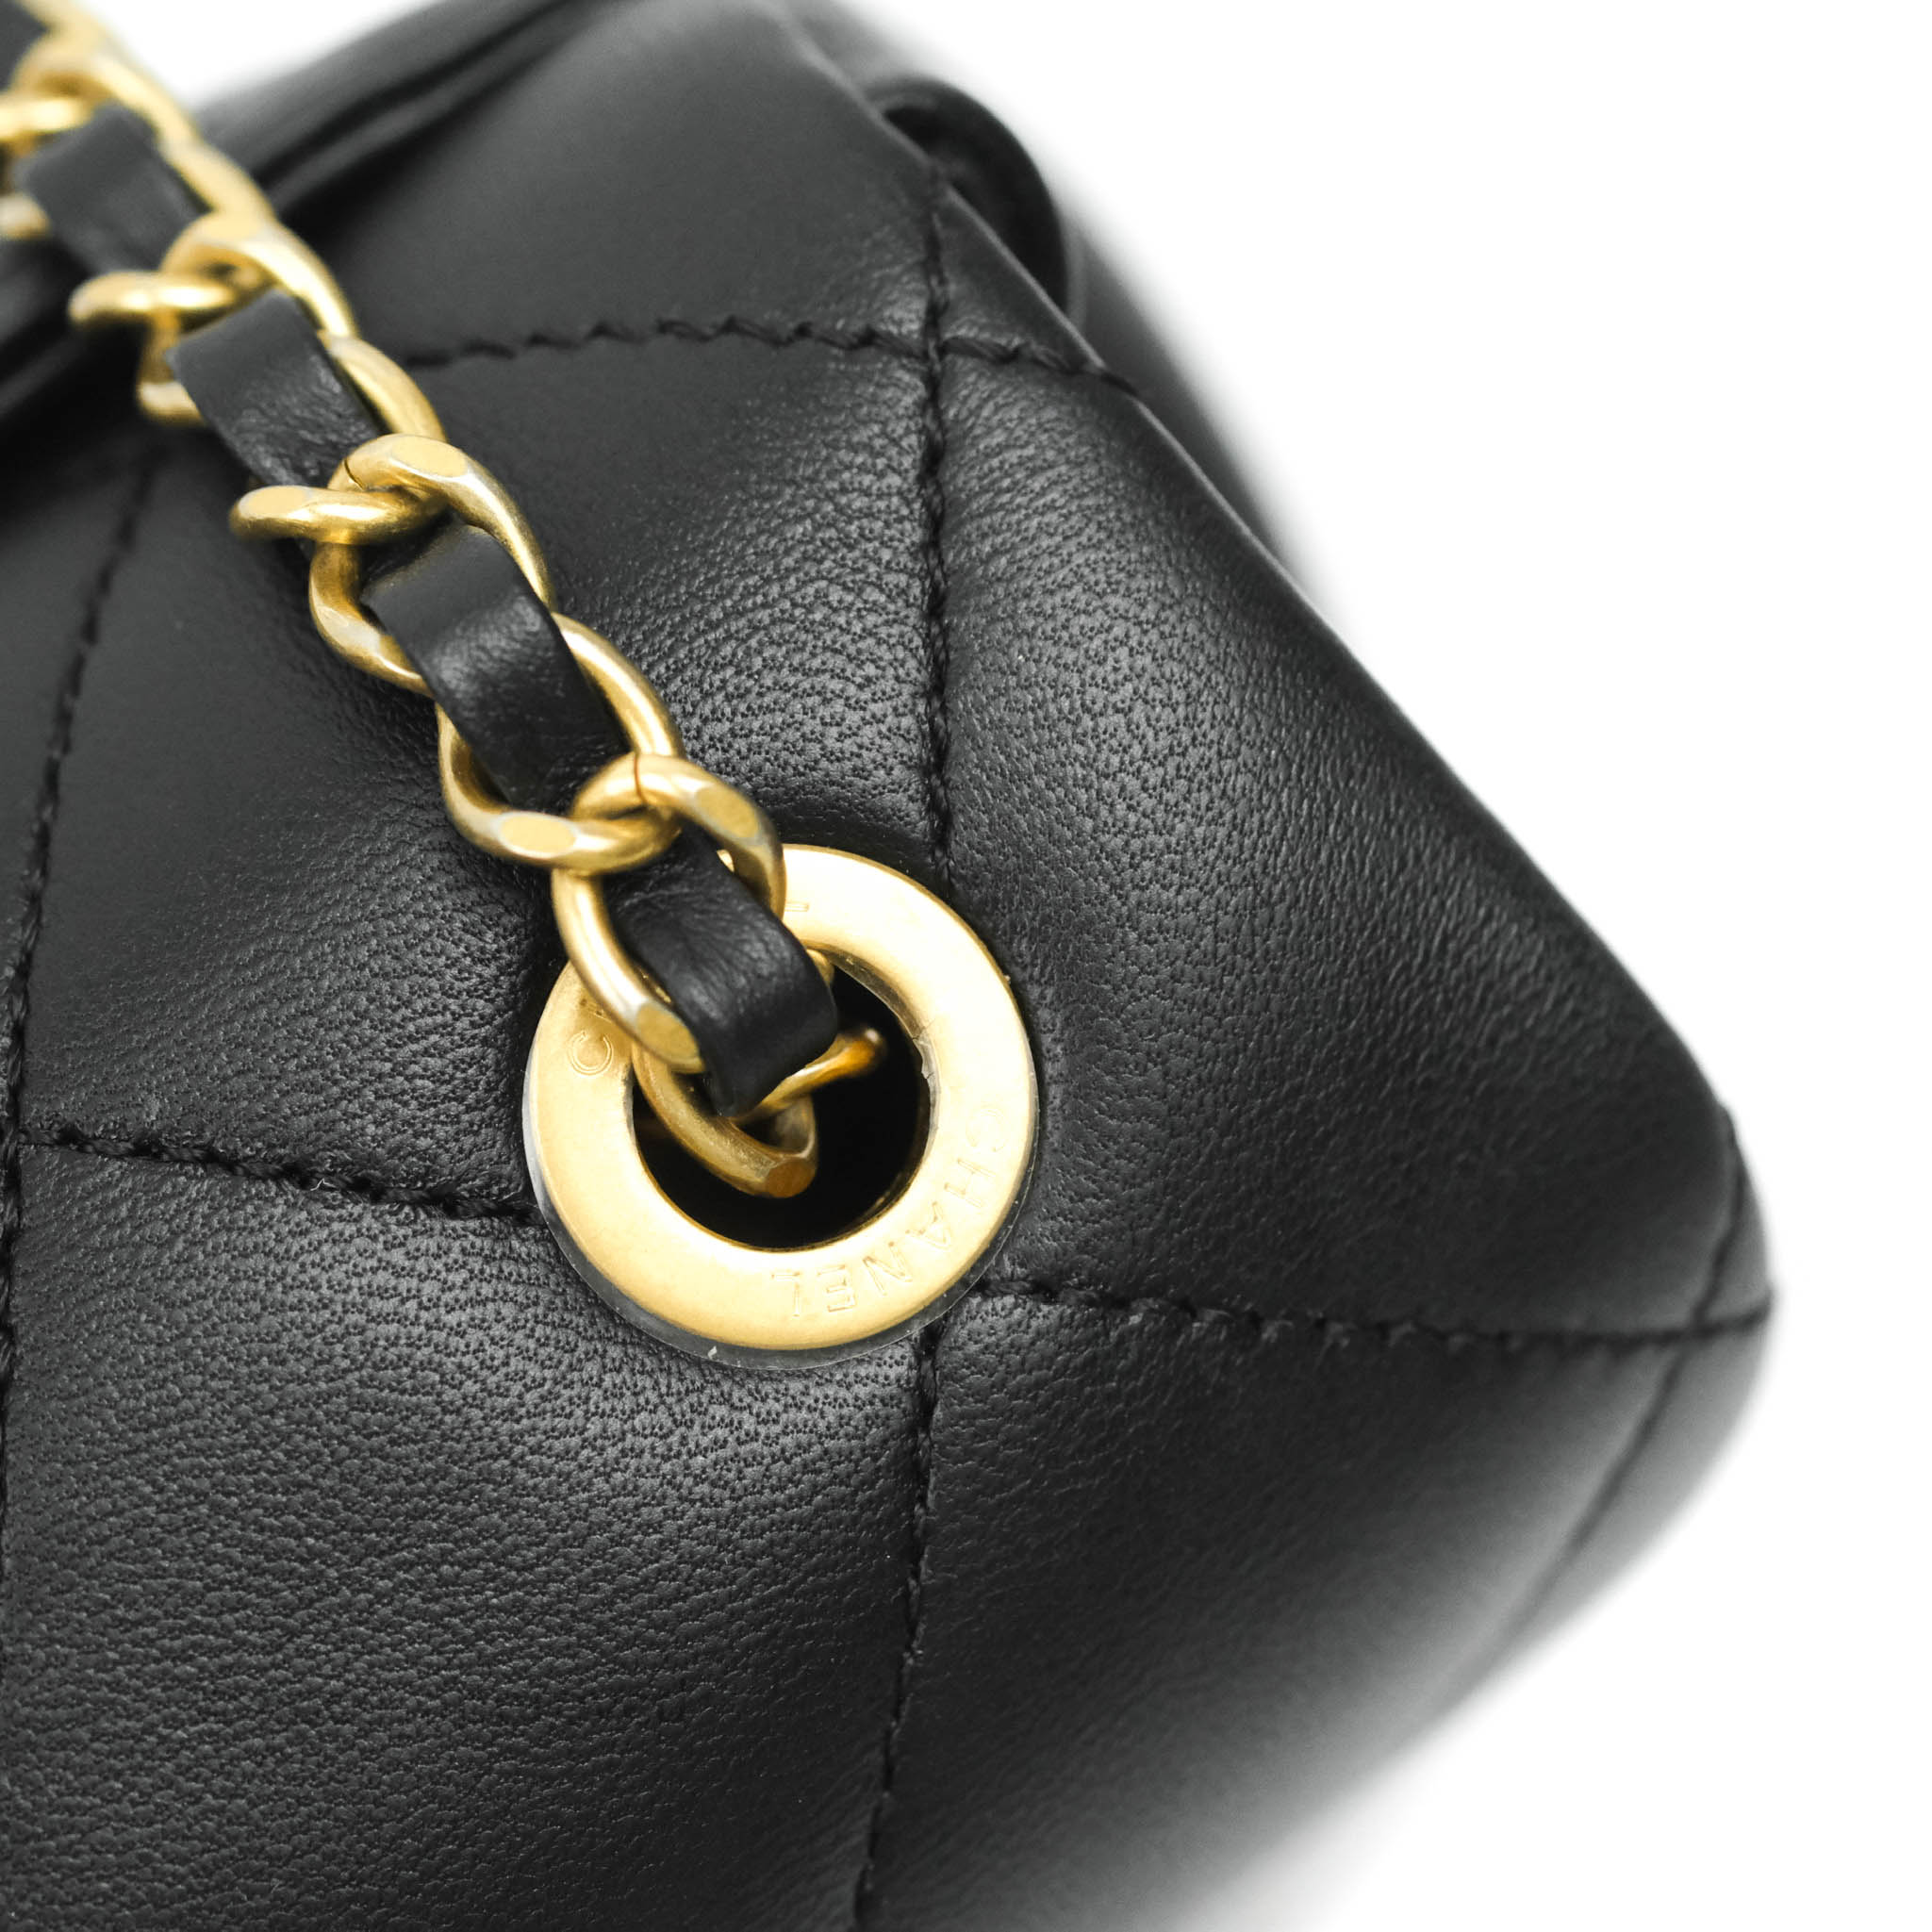 Chanel 19 Camera Bag Lambskin Black With Gold/Sliver Hardware